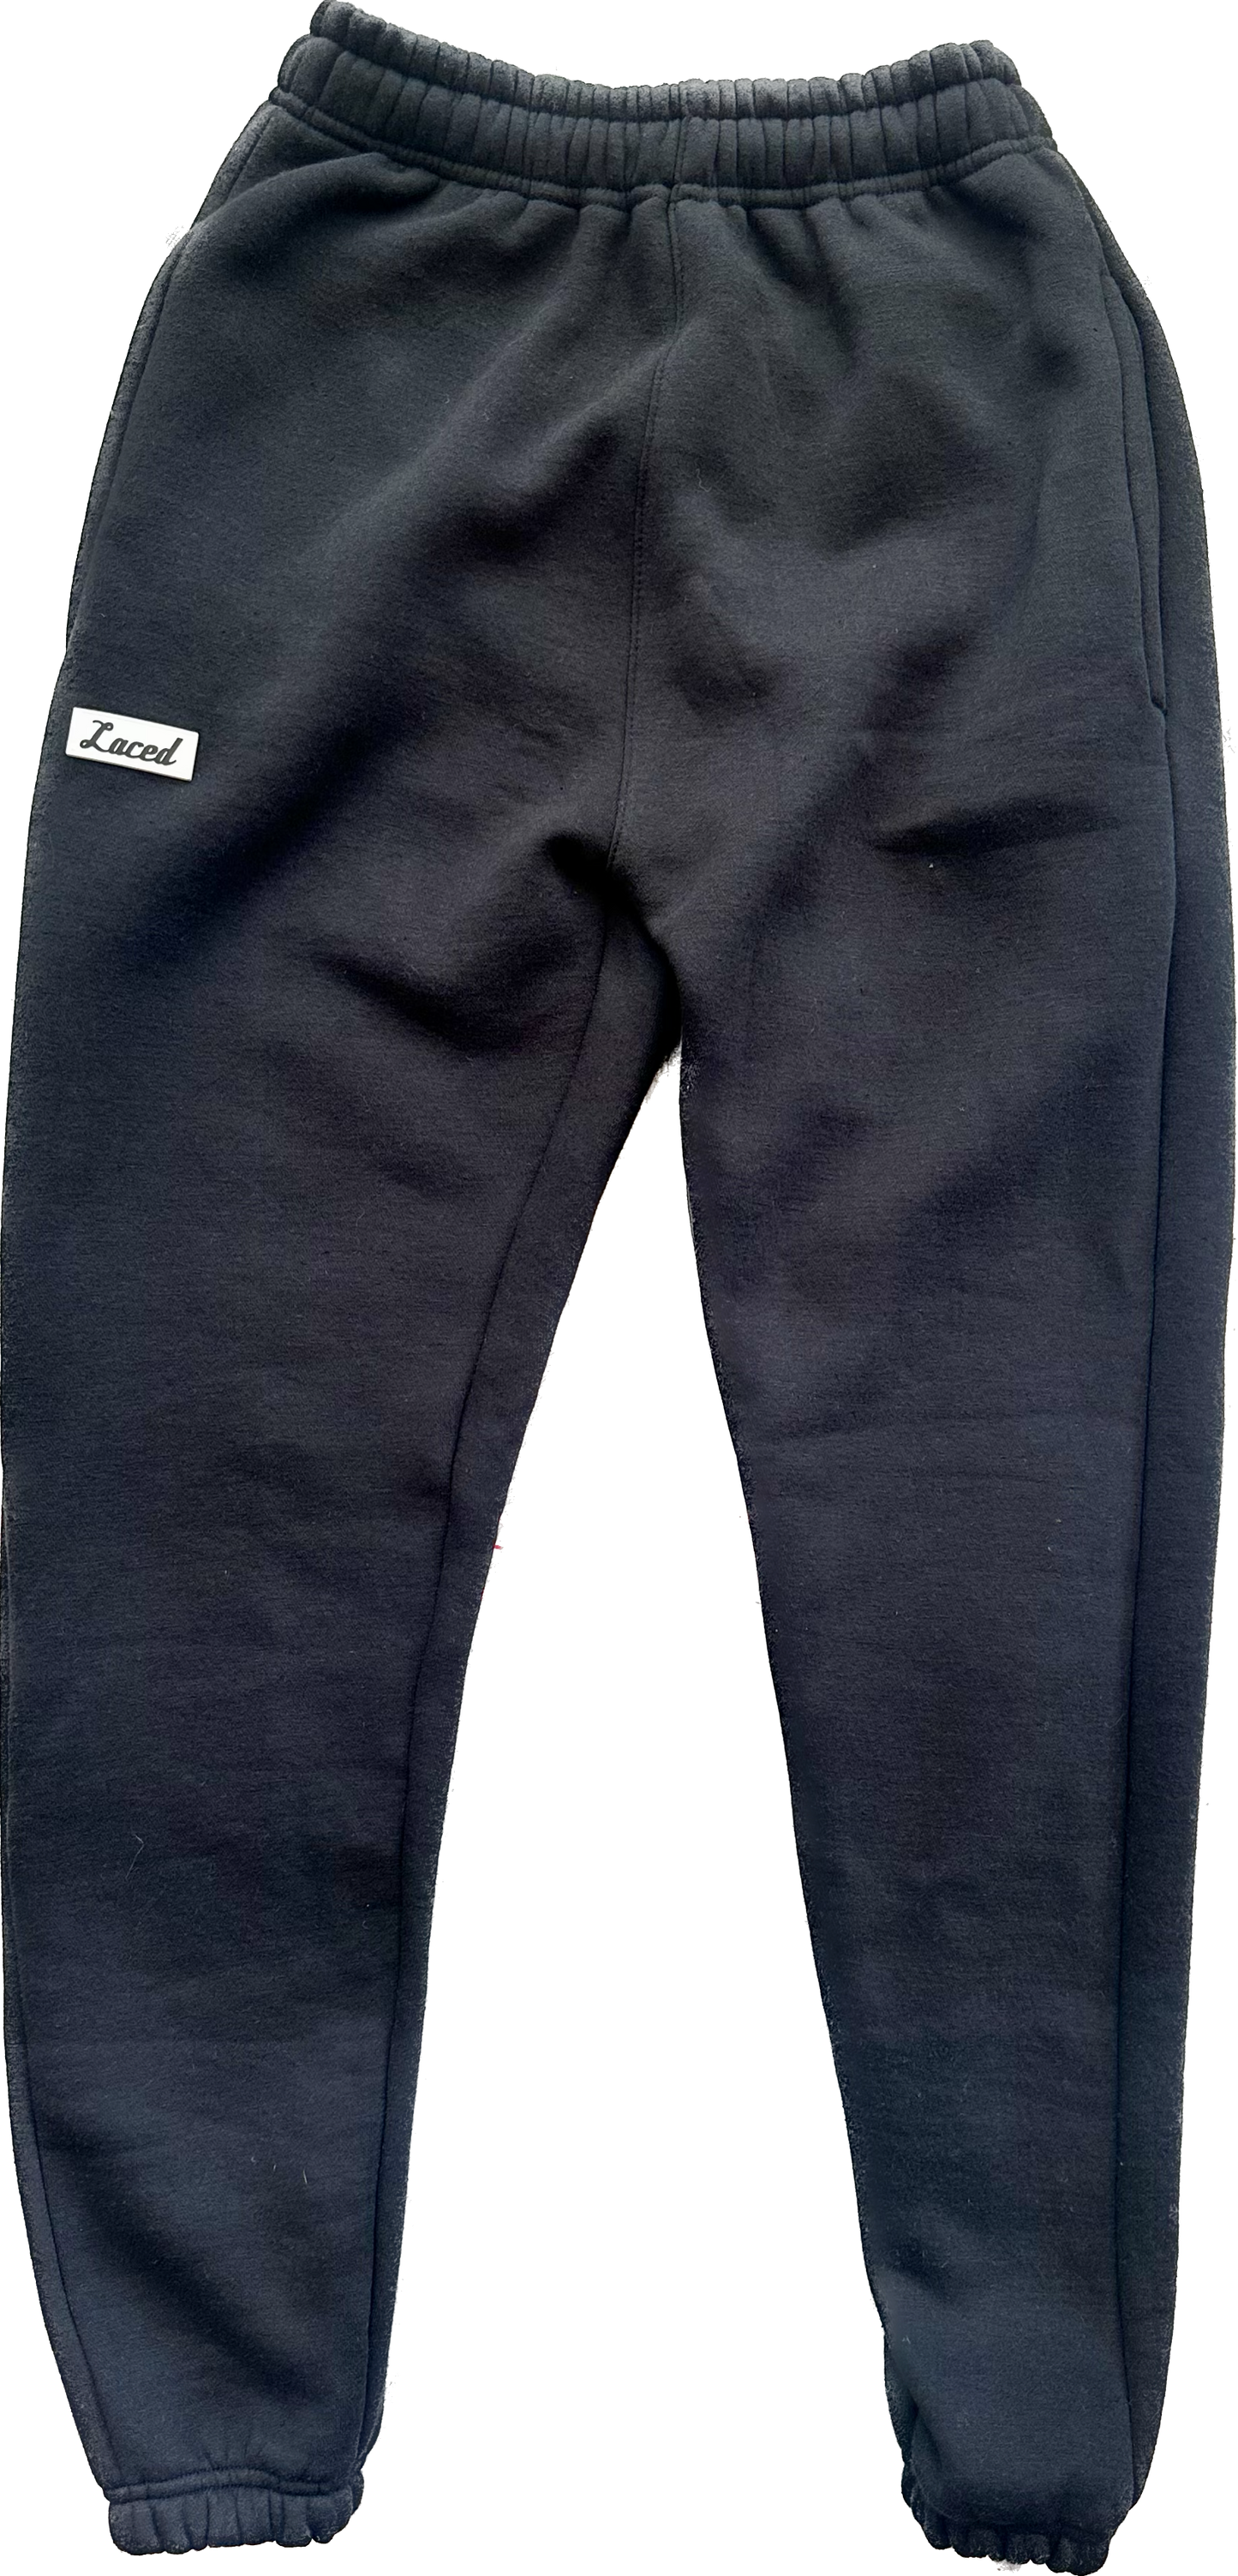 Laced Elements Collection Sweatpants Black